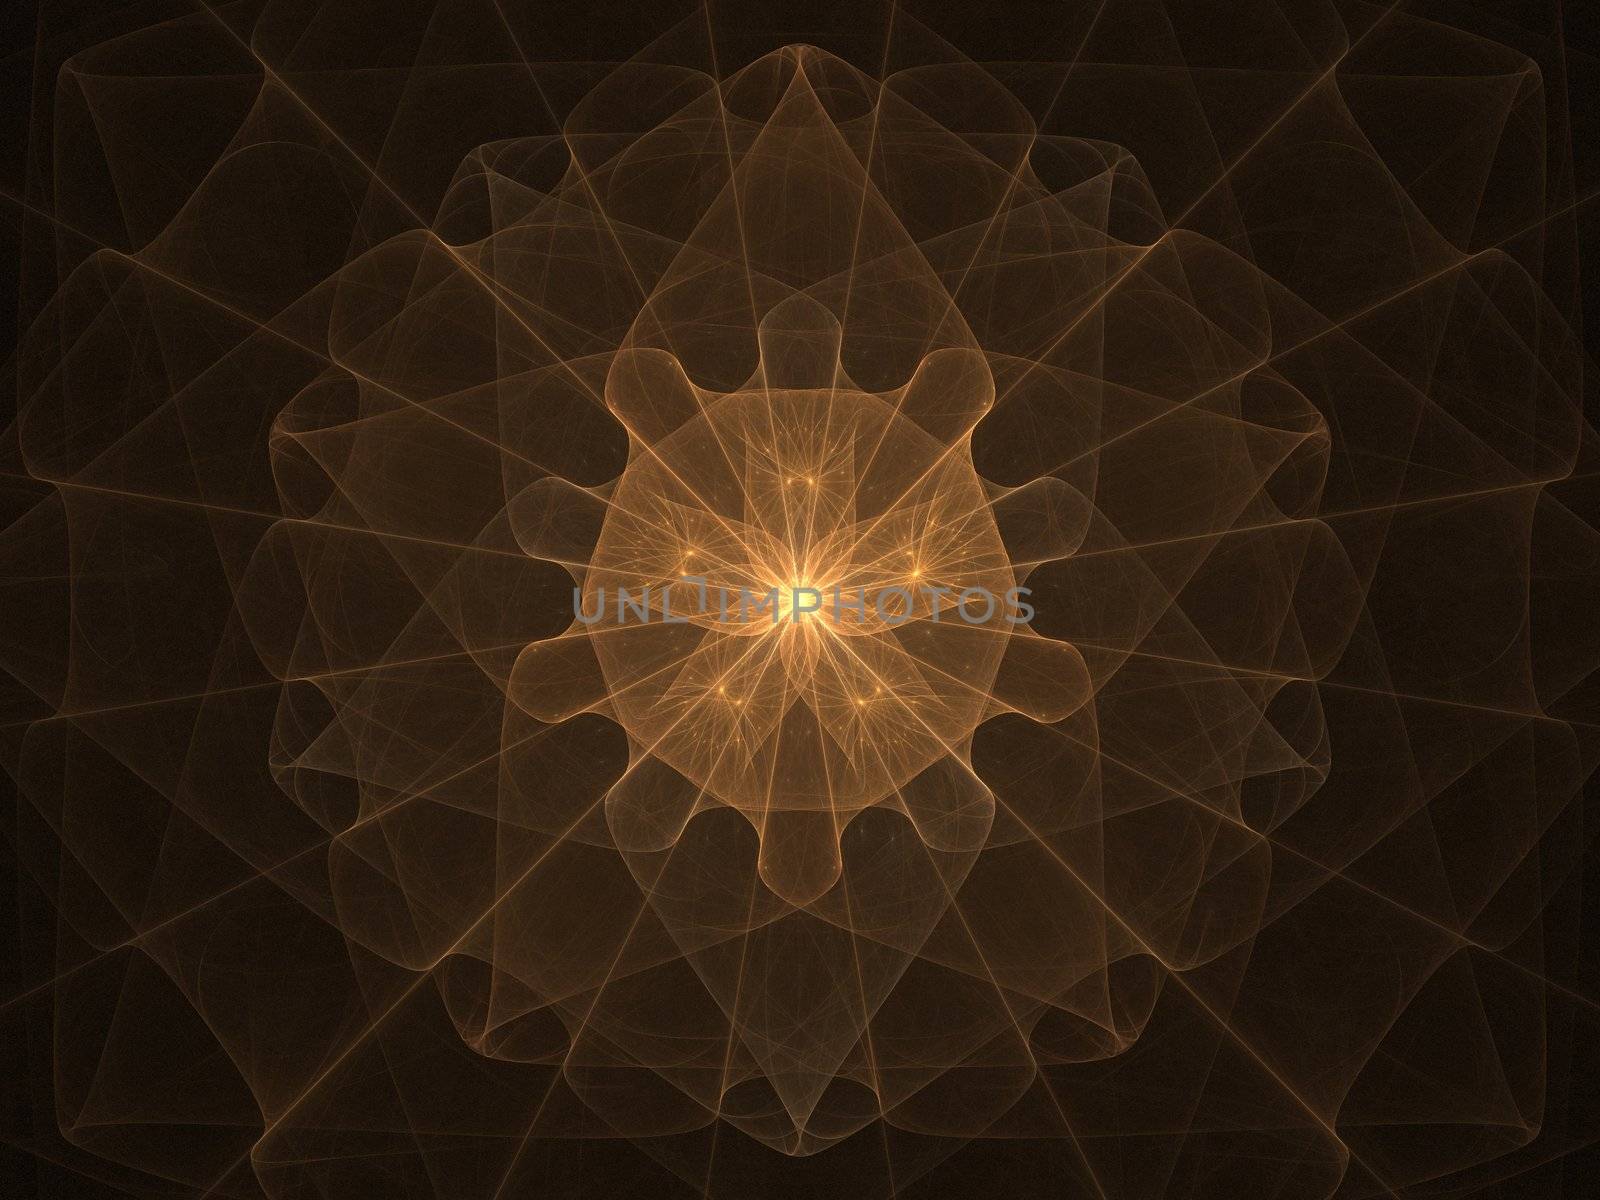 high resolution flame fractal forming a mandala that resembles a golden sphere or mandala